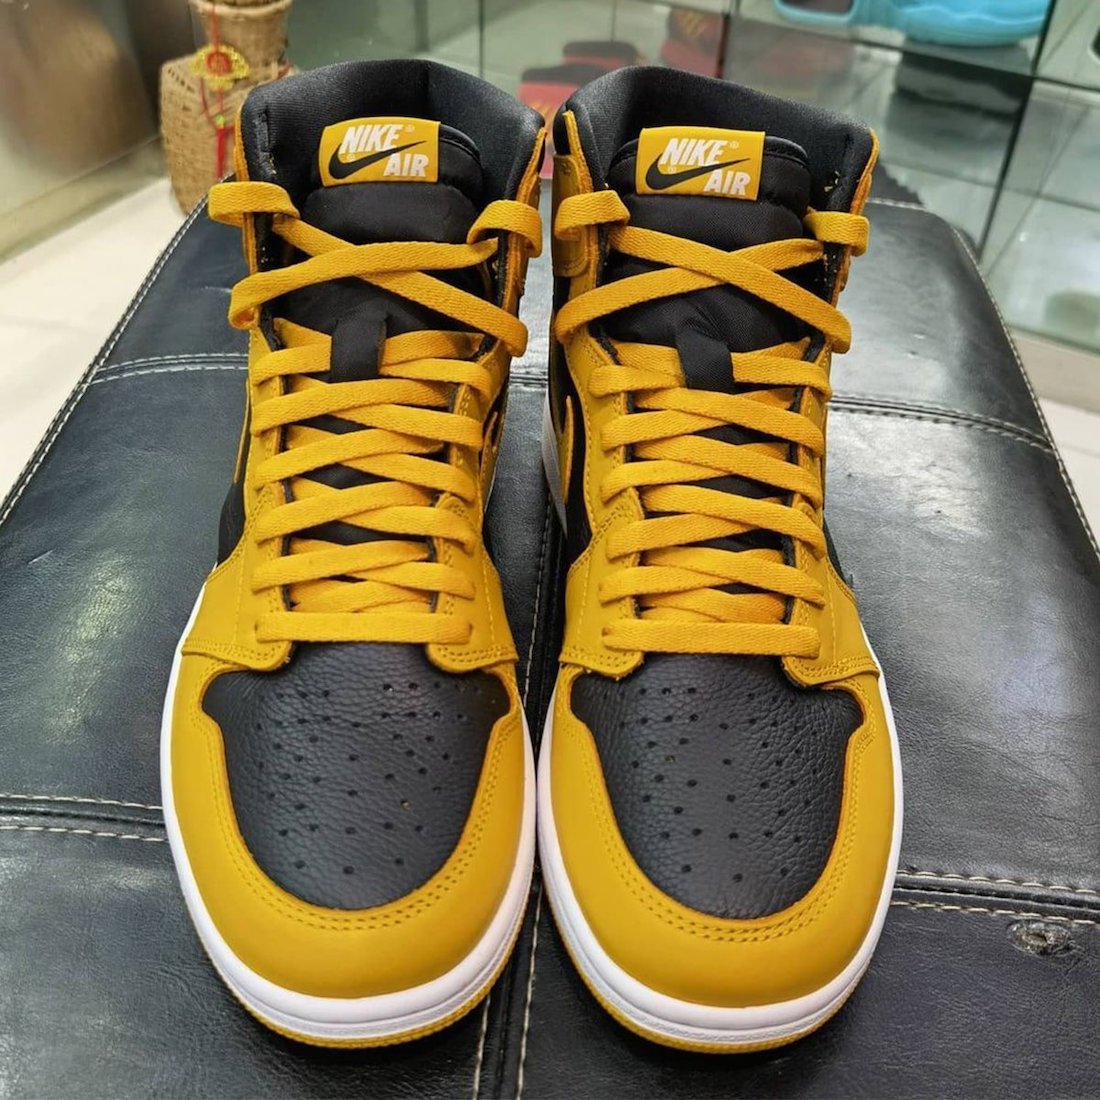 Jordan 2 Retro Homme Chaussures Pollen 555088-701 Release Date Pricing